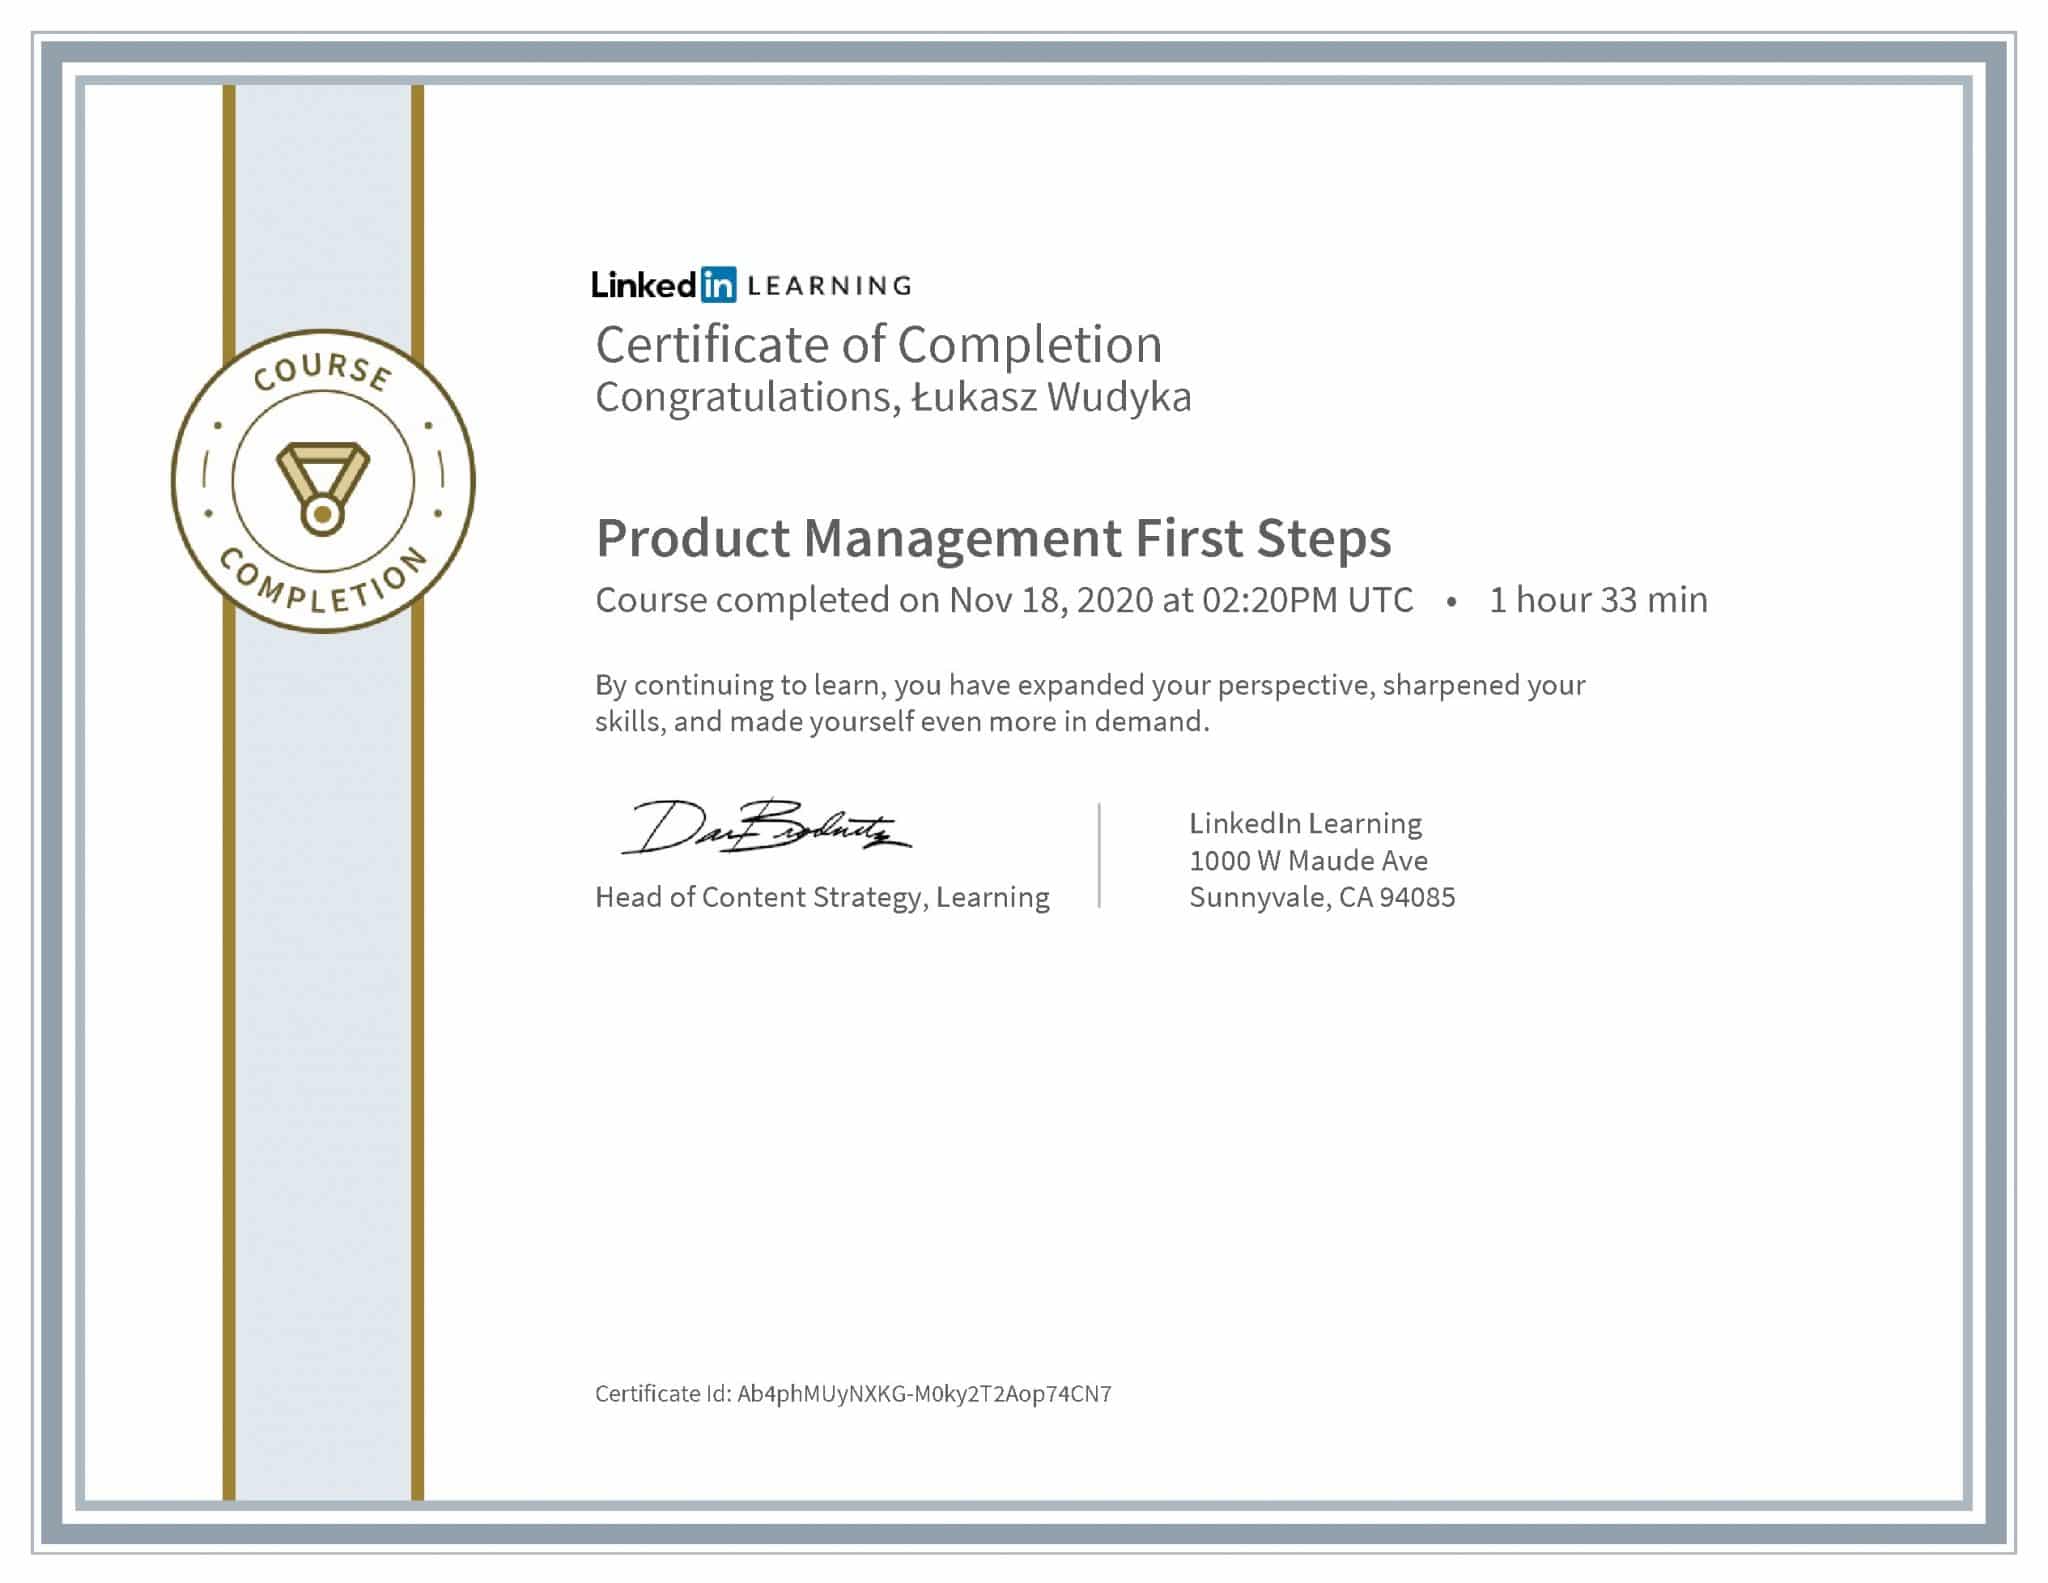 Łukasz Wudyka certyfikat LinkedIn Product Management First Steps